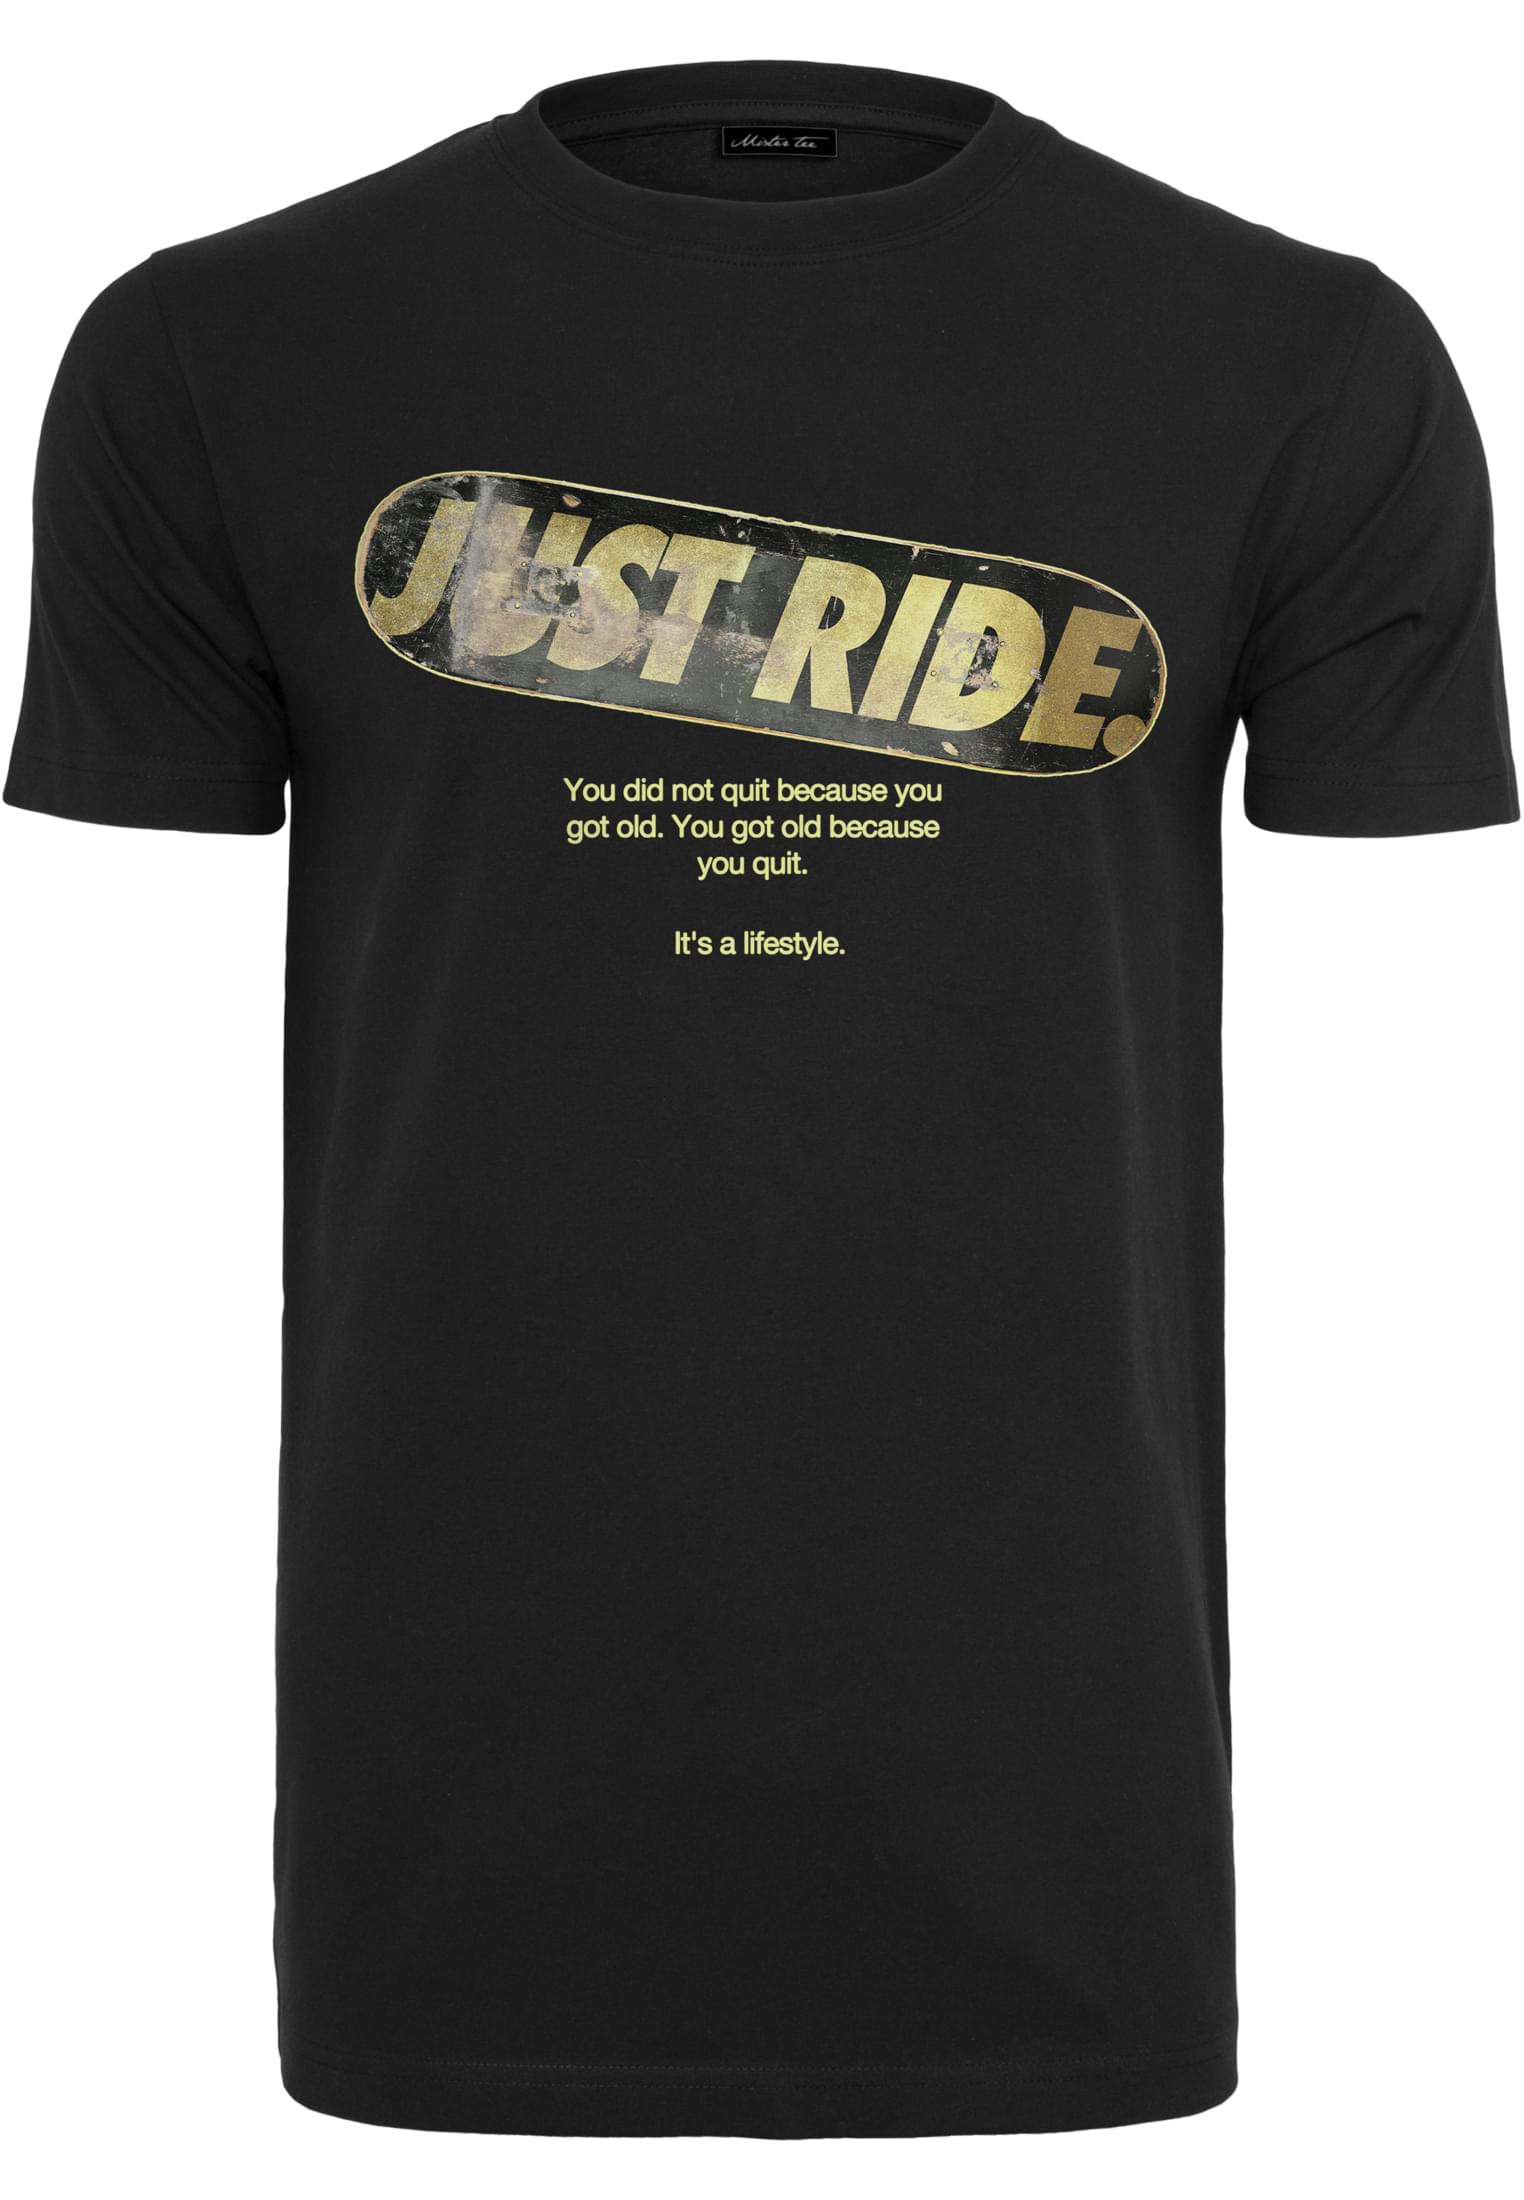 Black Just Ride T-shirt